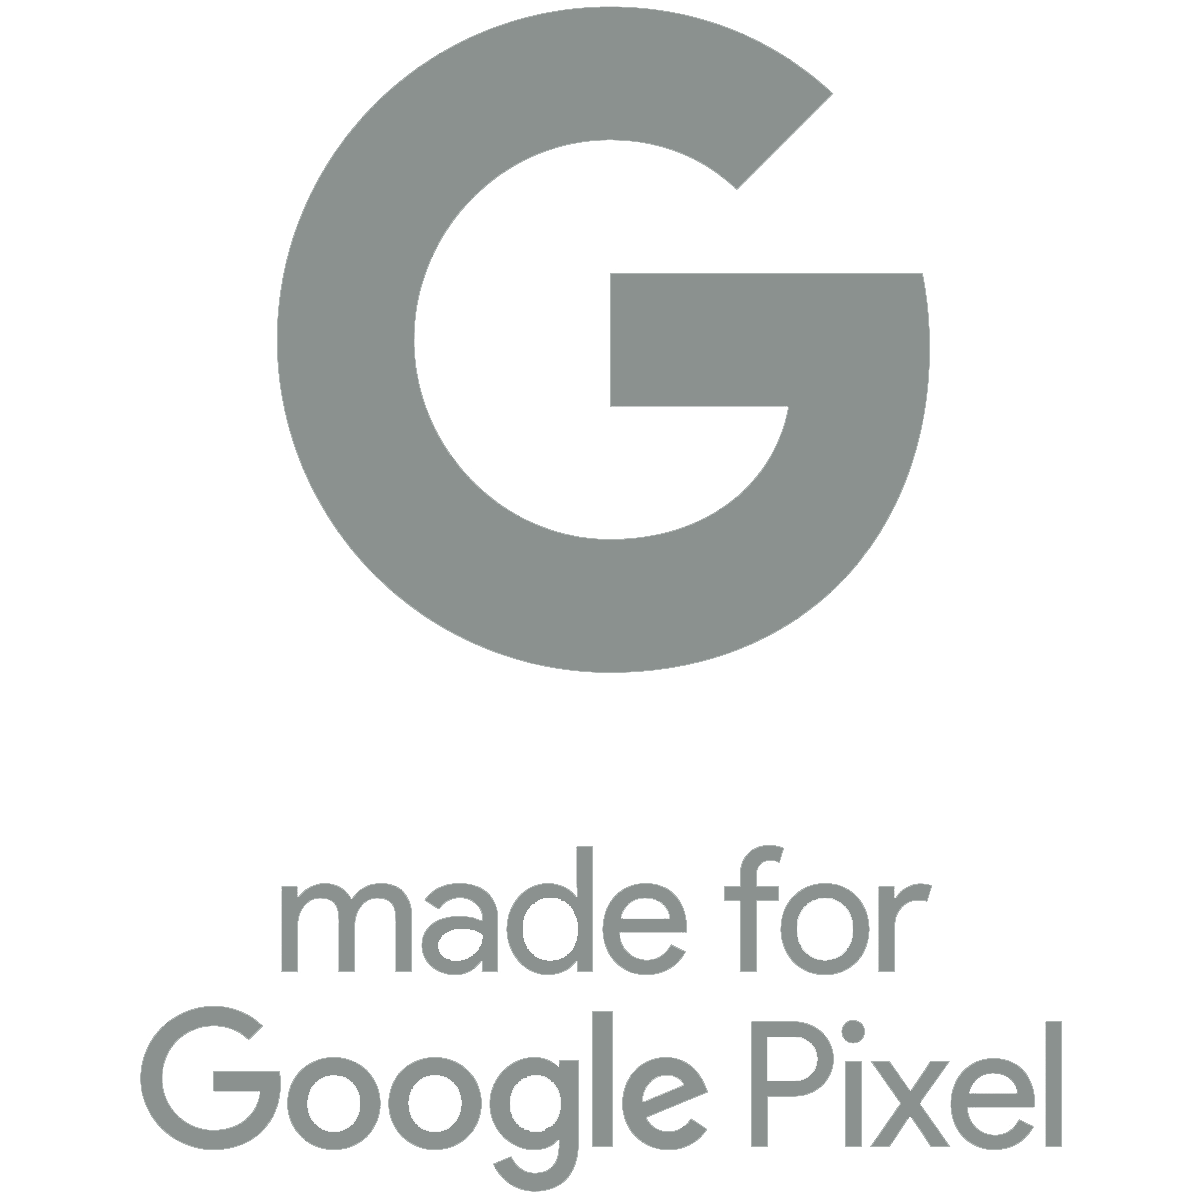 Google Pixel Logo Transparent Gallery